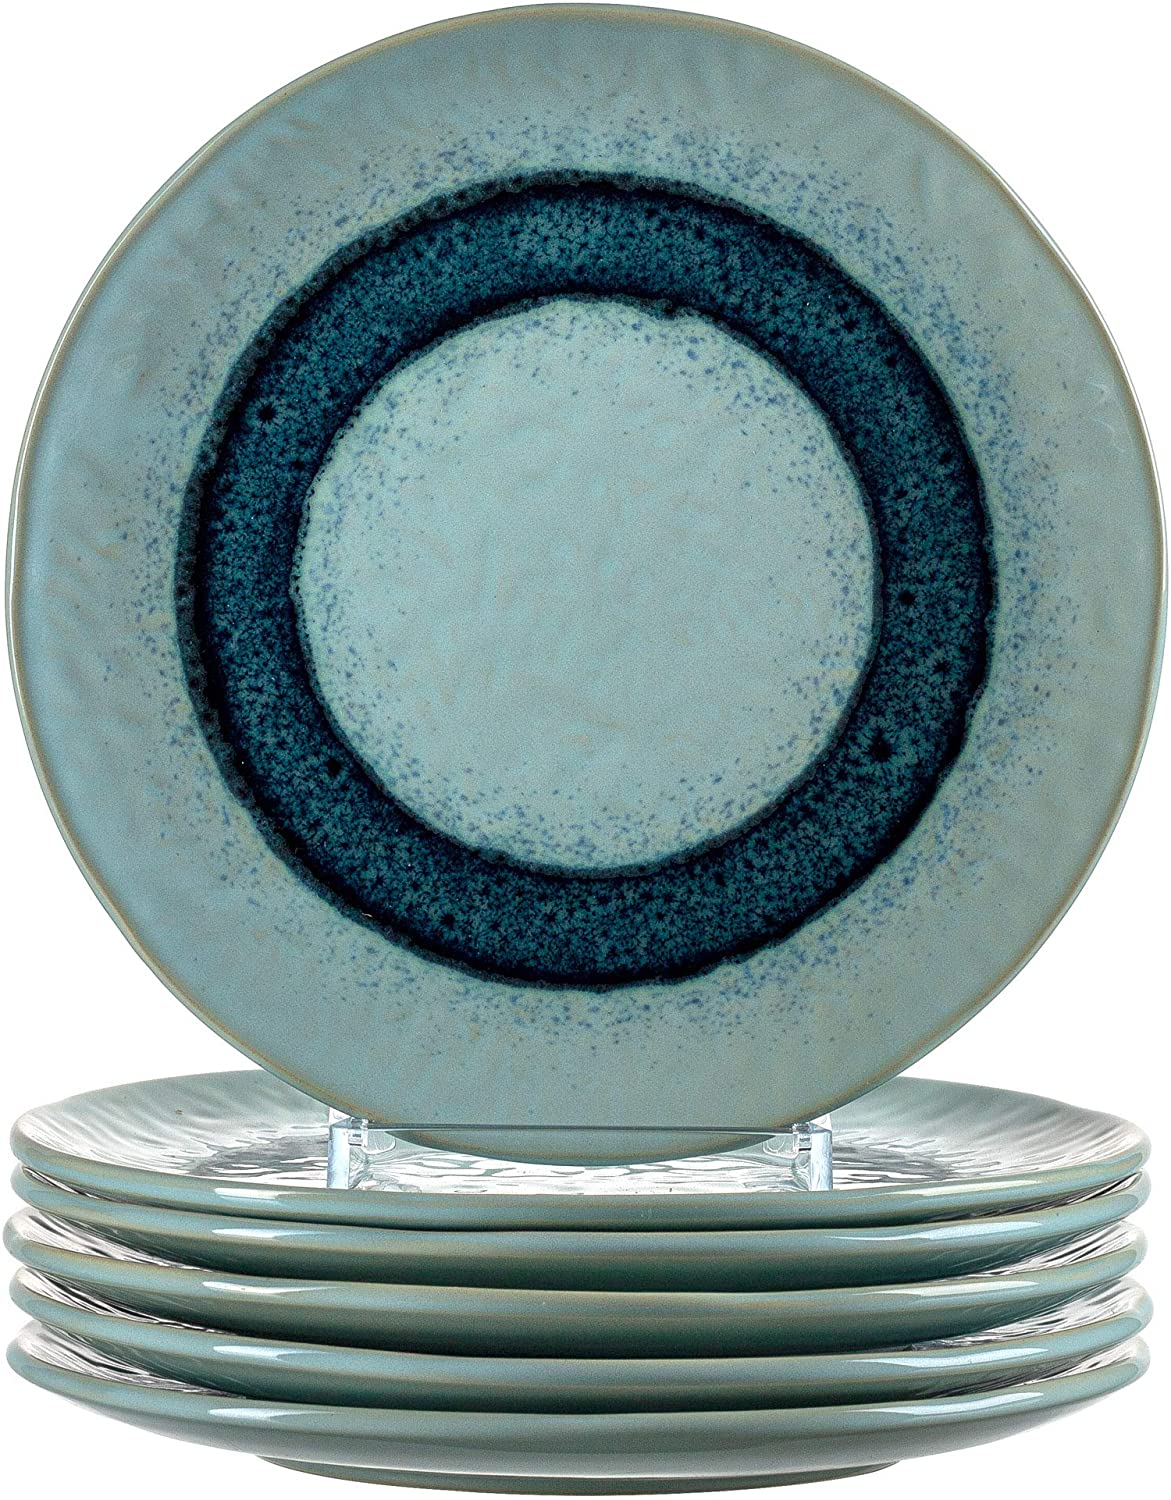 Leonardo Matera 018544 Ceramic Plates Set of 6 Dishwasher Safe Dinner Plates with Glaze 6 Round Stoneware Plates Diameter 22.5 cm Blue